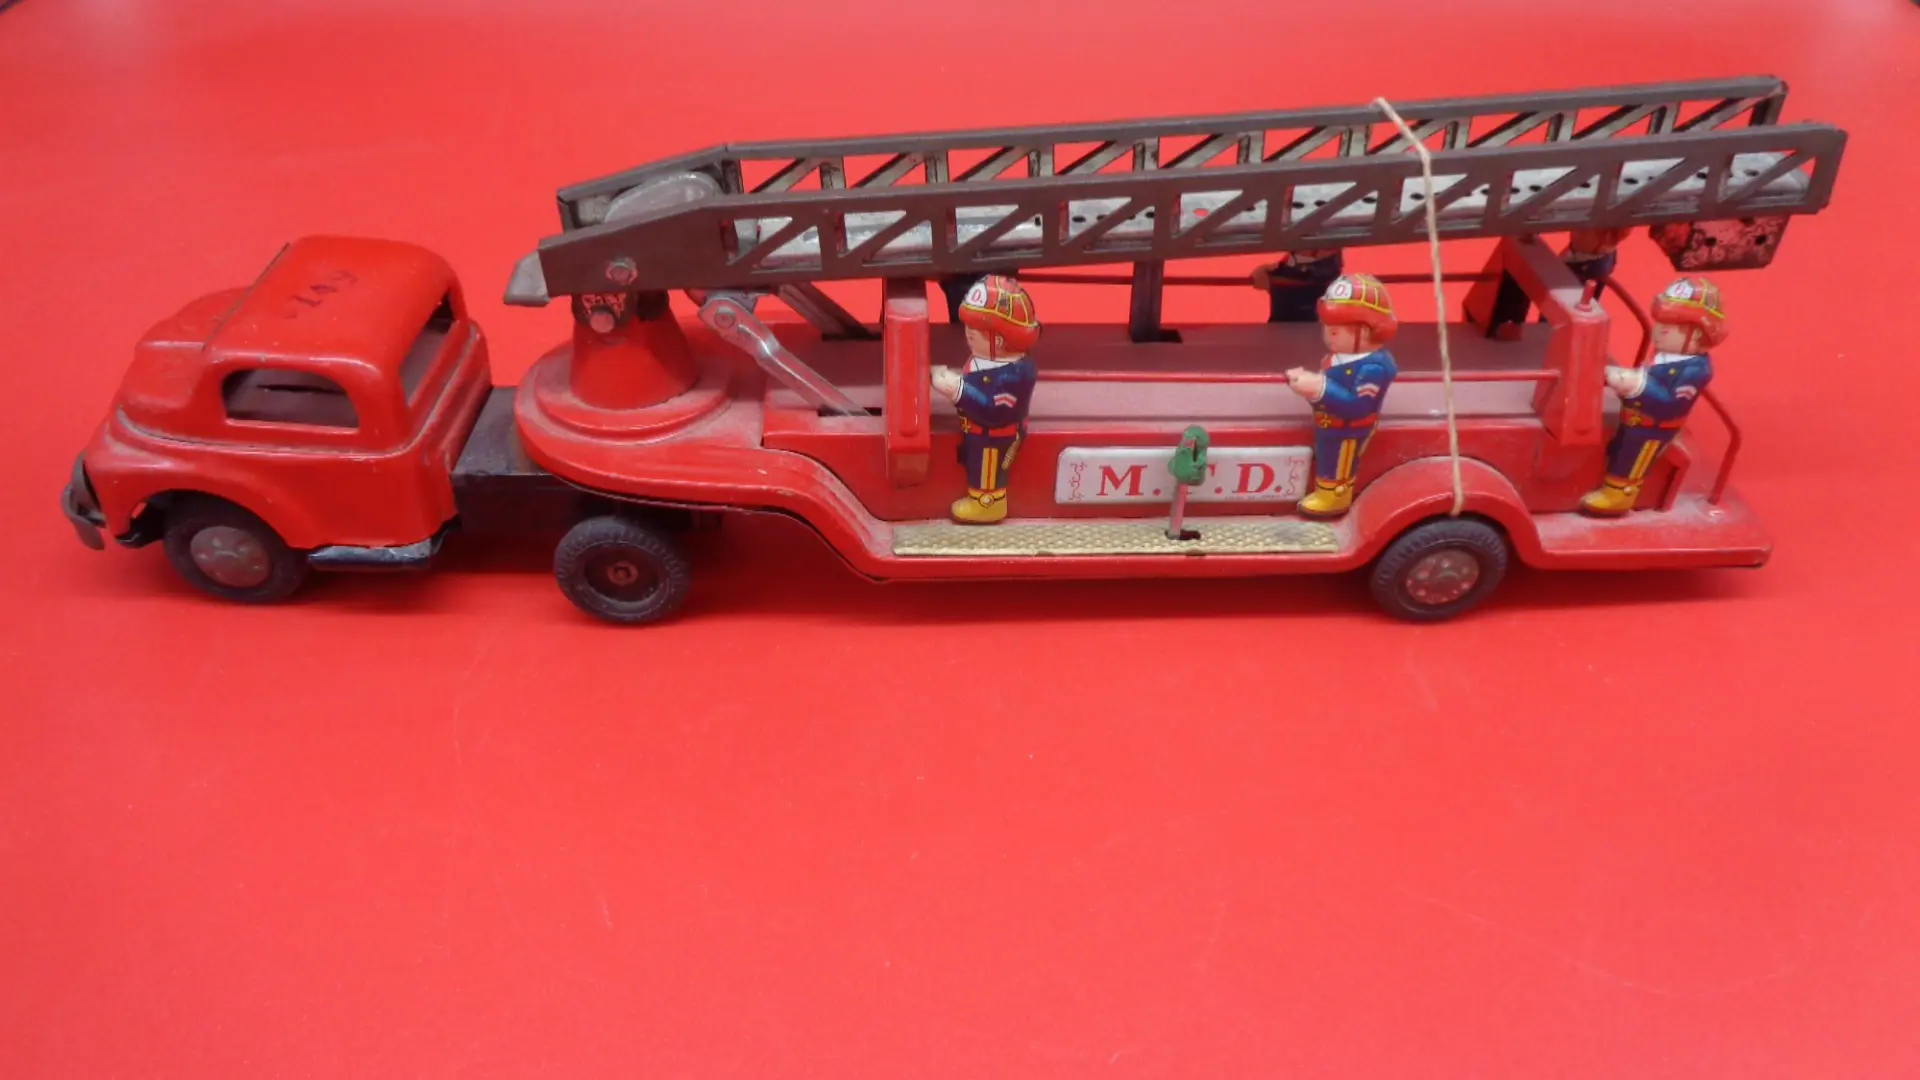 Long, vintage toy firetruck